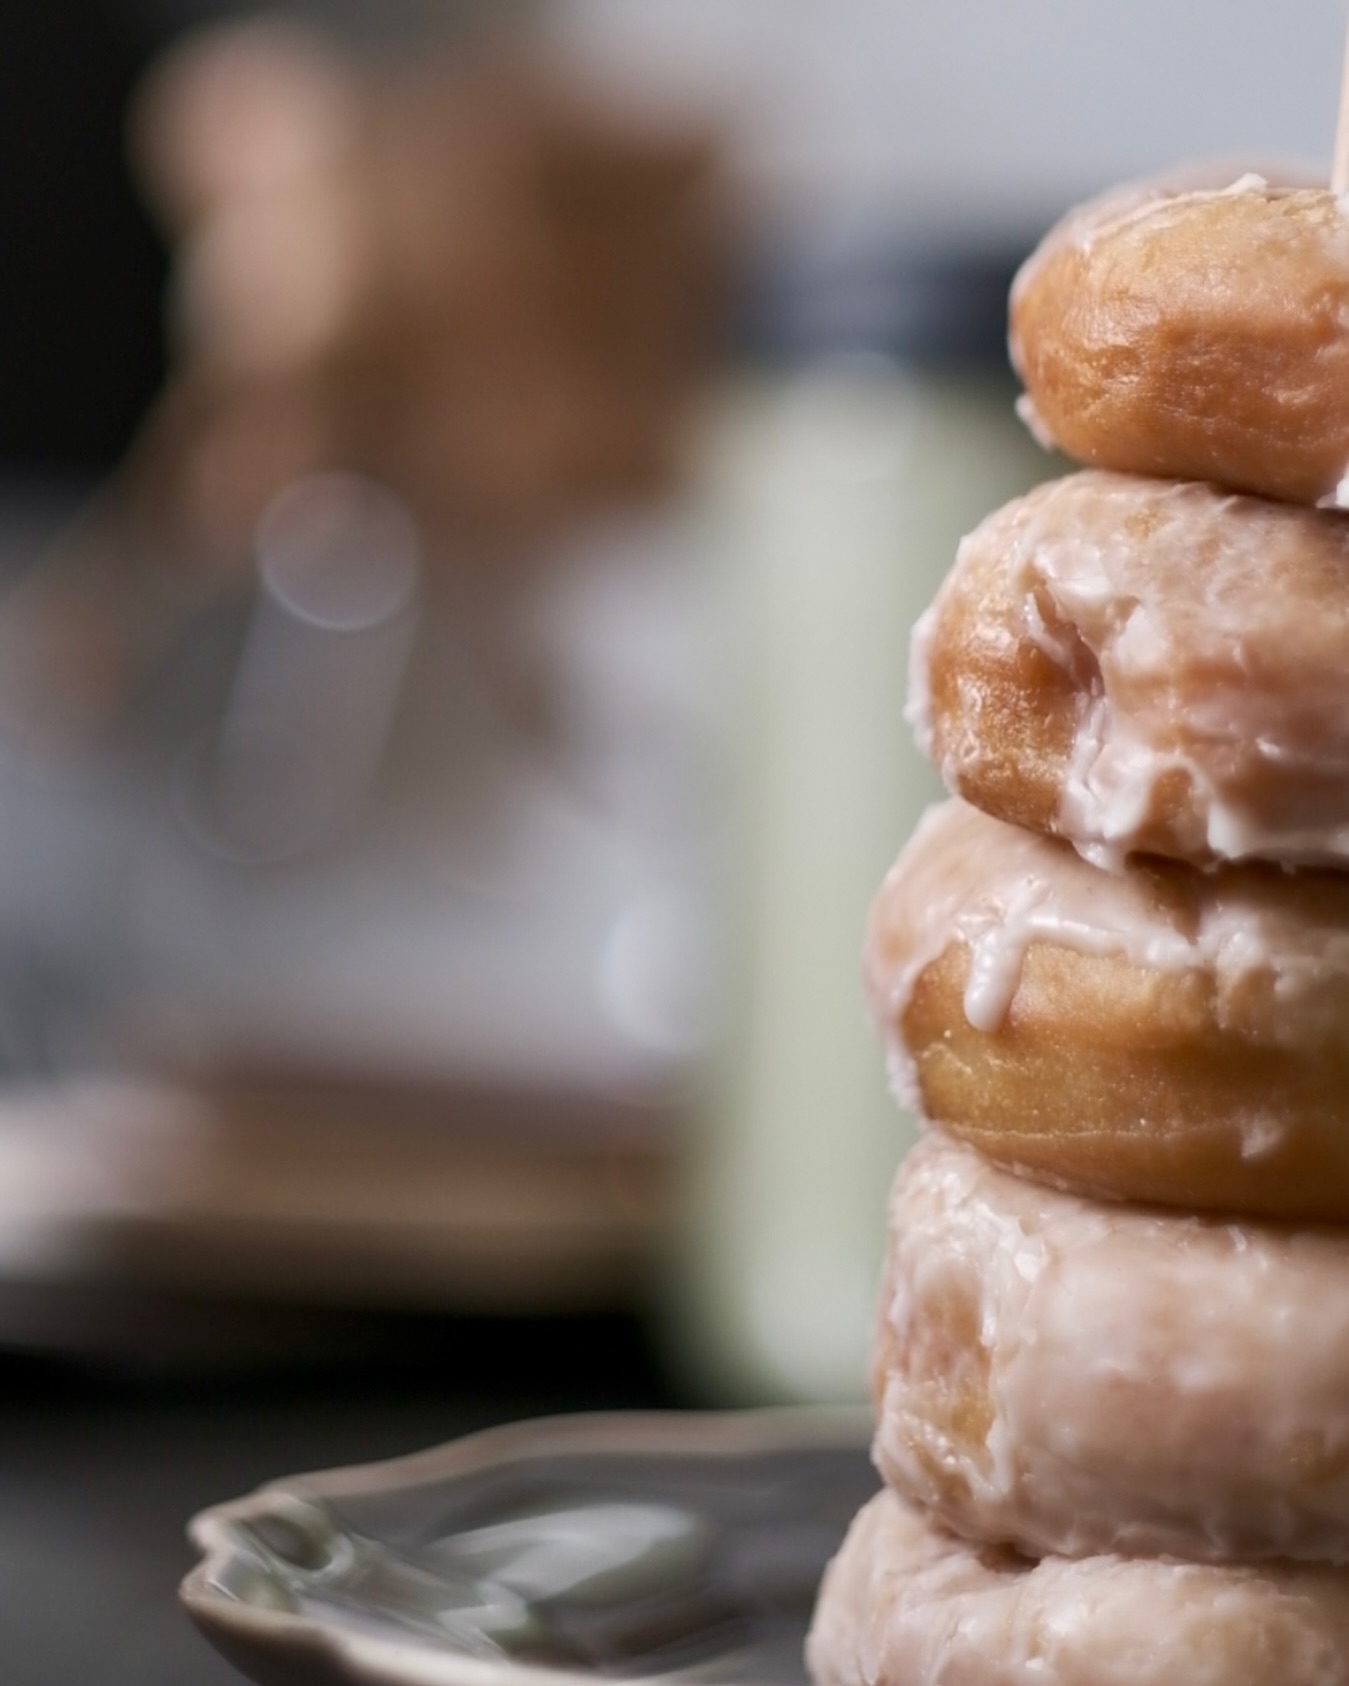 We have @runawaybakeshop donuts today! Here til 11 :)